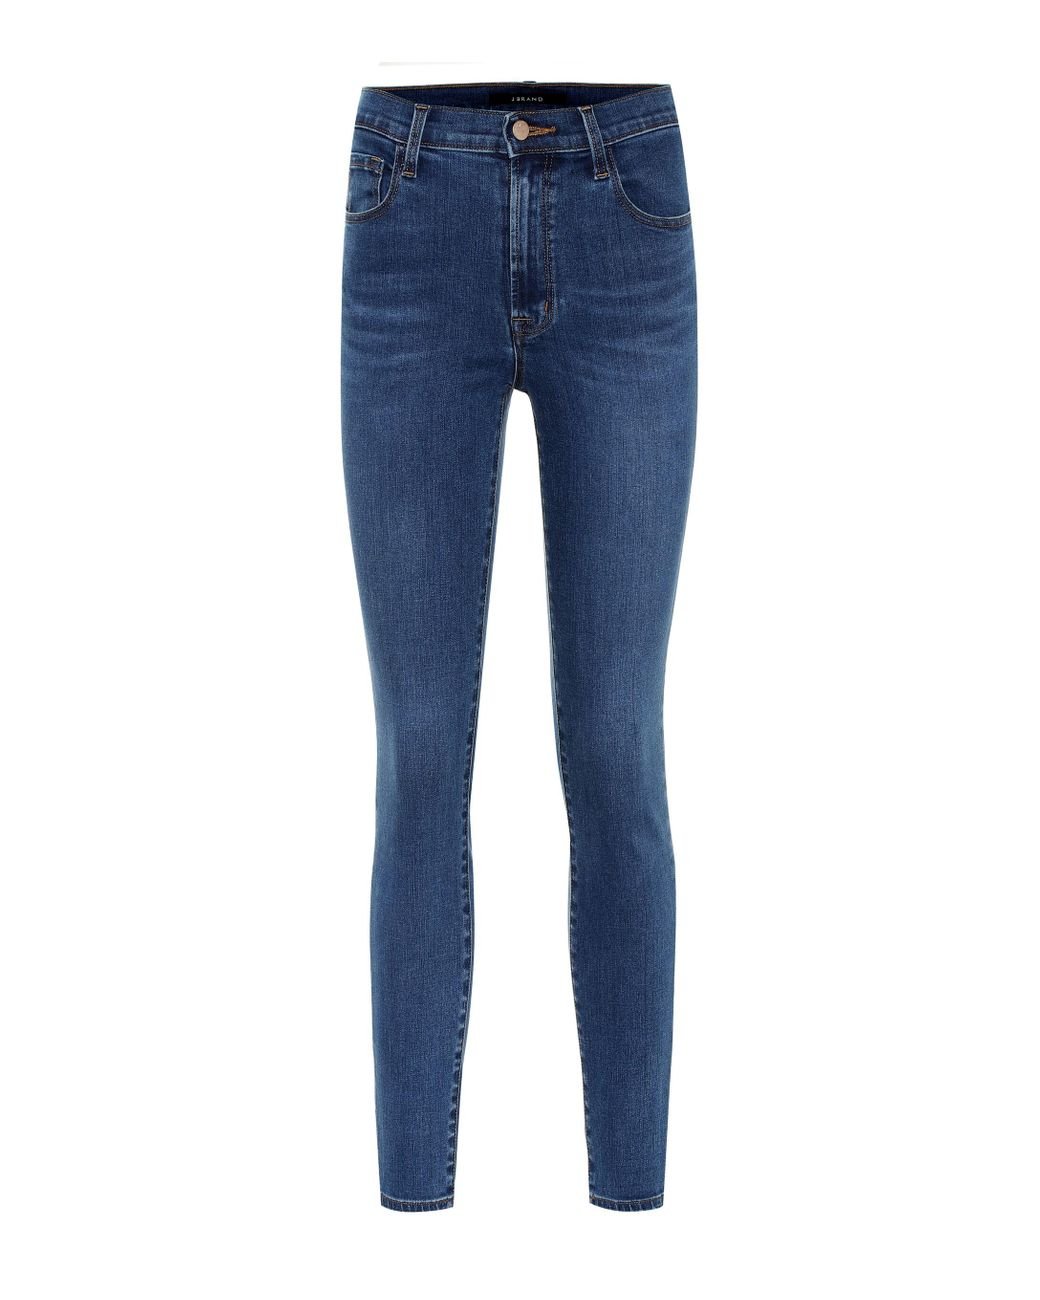 J Brand Denim Leenah High-rise Skinny Jeans in Blue - Lyst